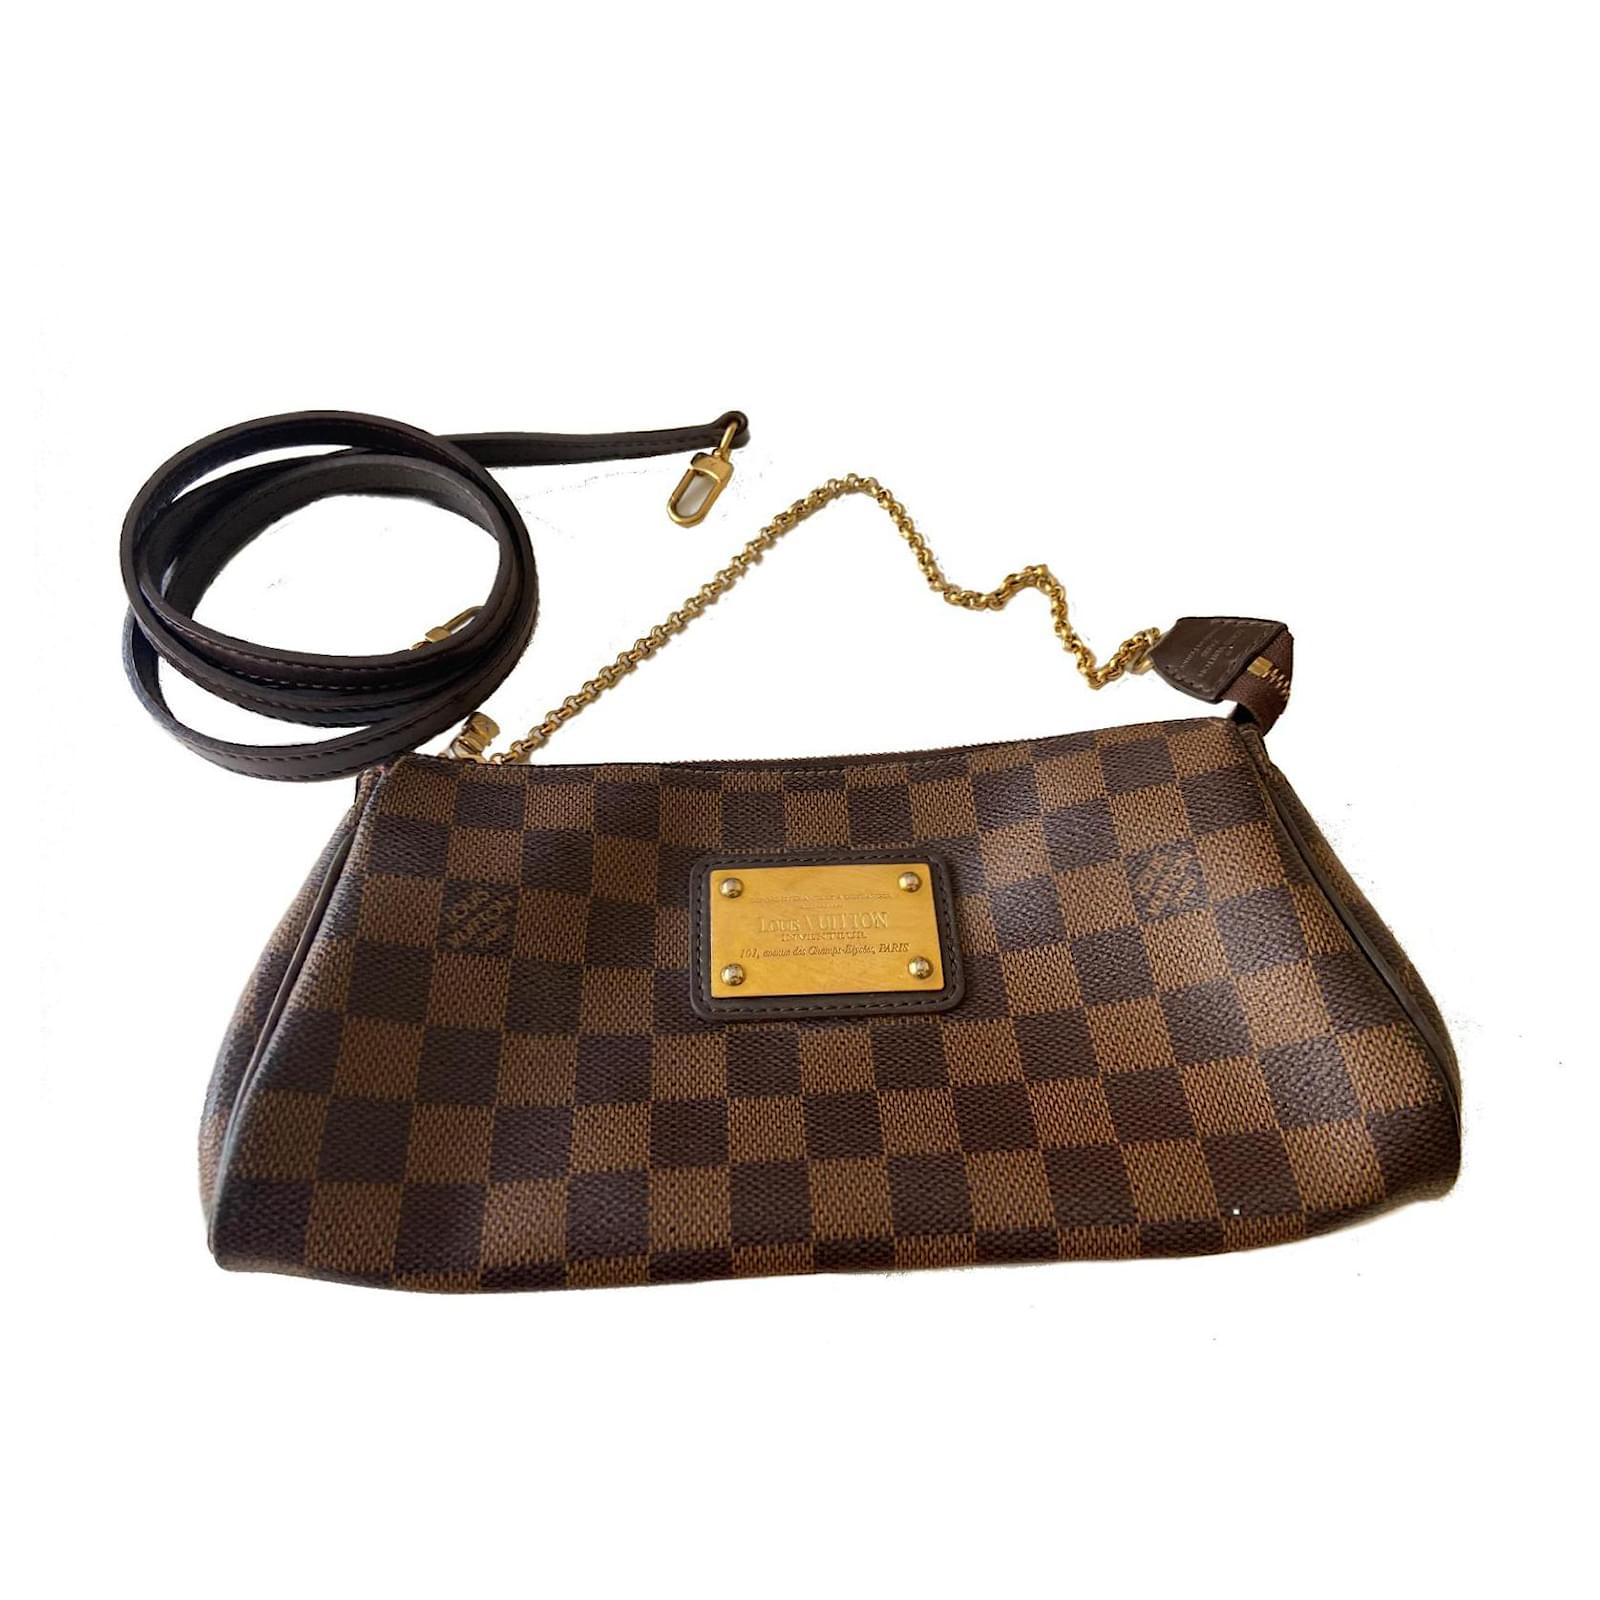 Louis Vuitton Eva shoulder bag in brown monogram canvas and